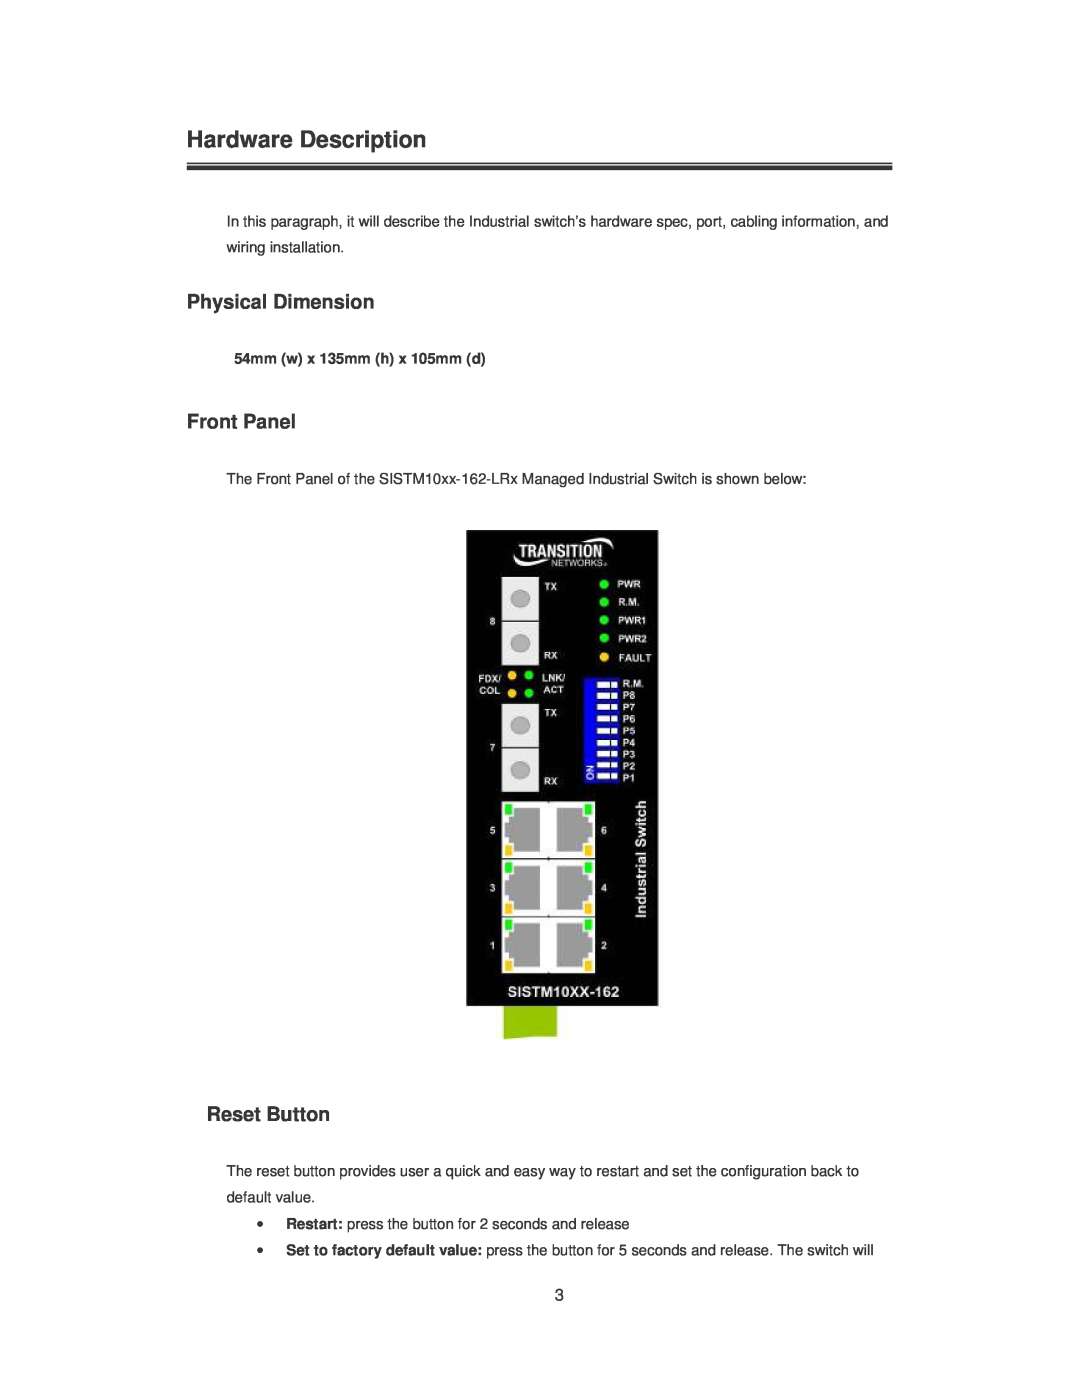 Transition Networks SISTM10XX-162-LR Hardware Description, Physical Dimension, Front Panel, Reset Button 